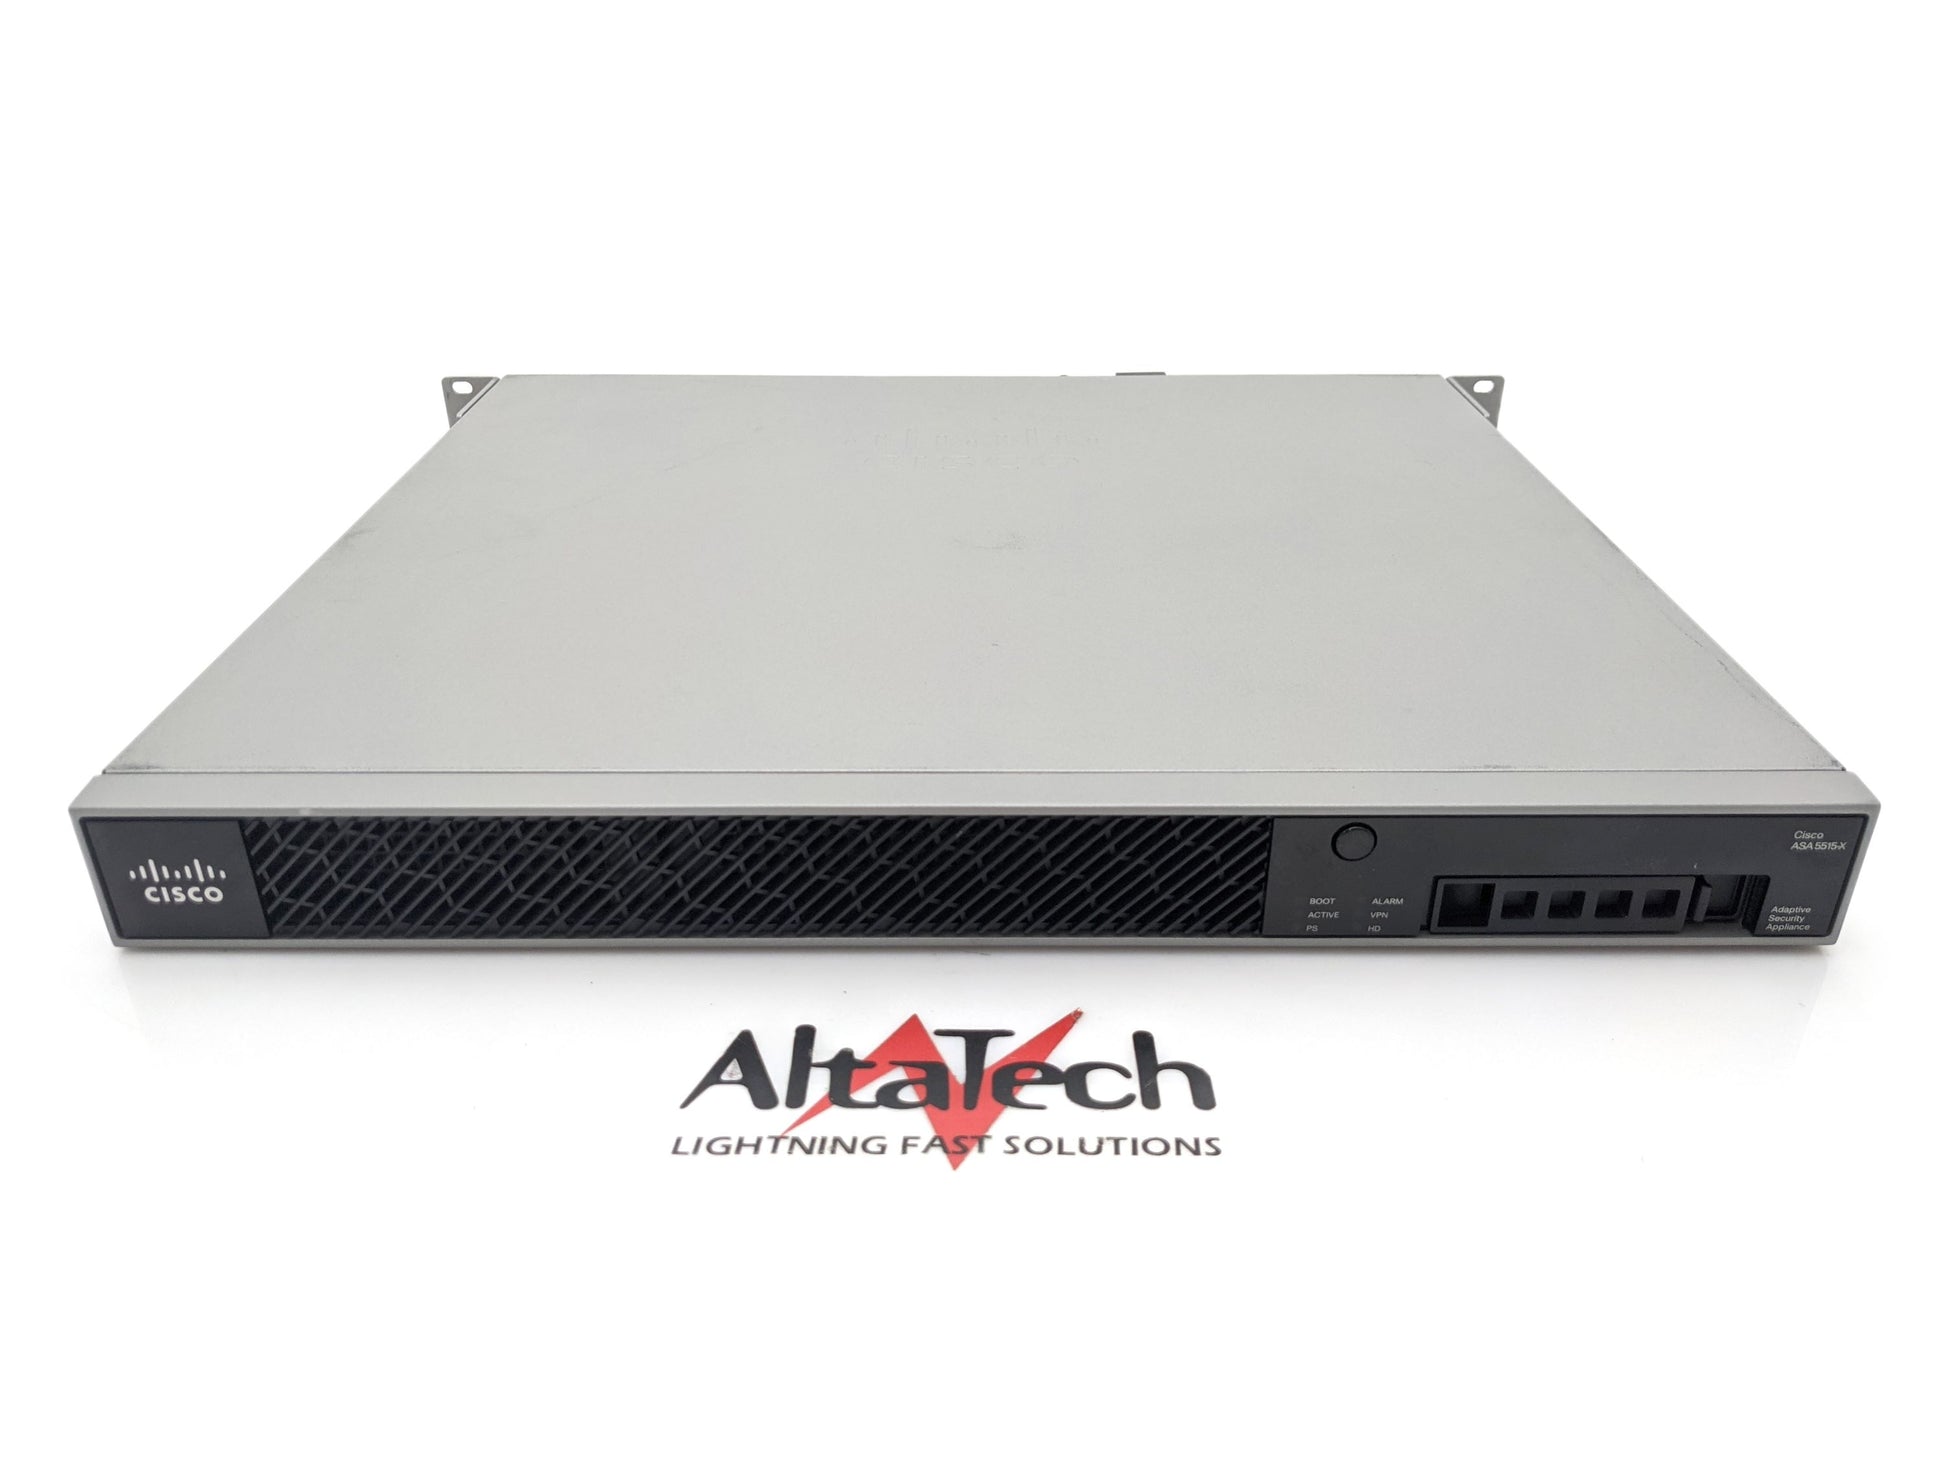 Cisco ASA5515-K9 6x 1GbE Adaptive Security Appliance, ASA 5500 Series 1.2Gbps Firewall, Used